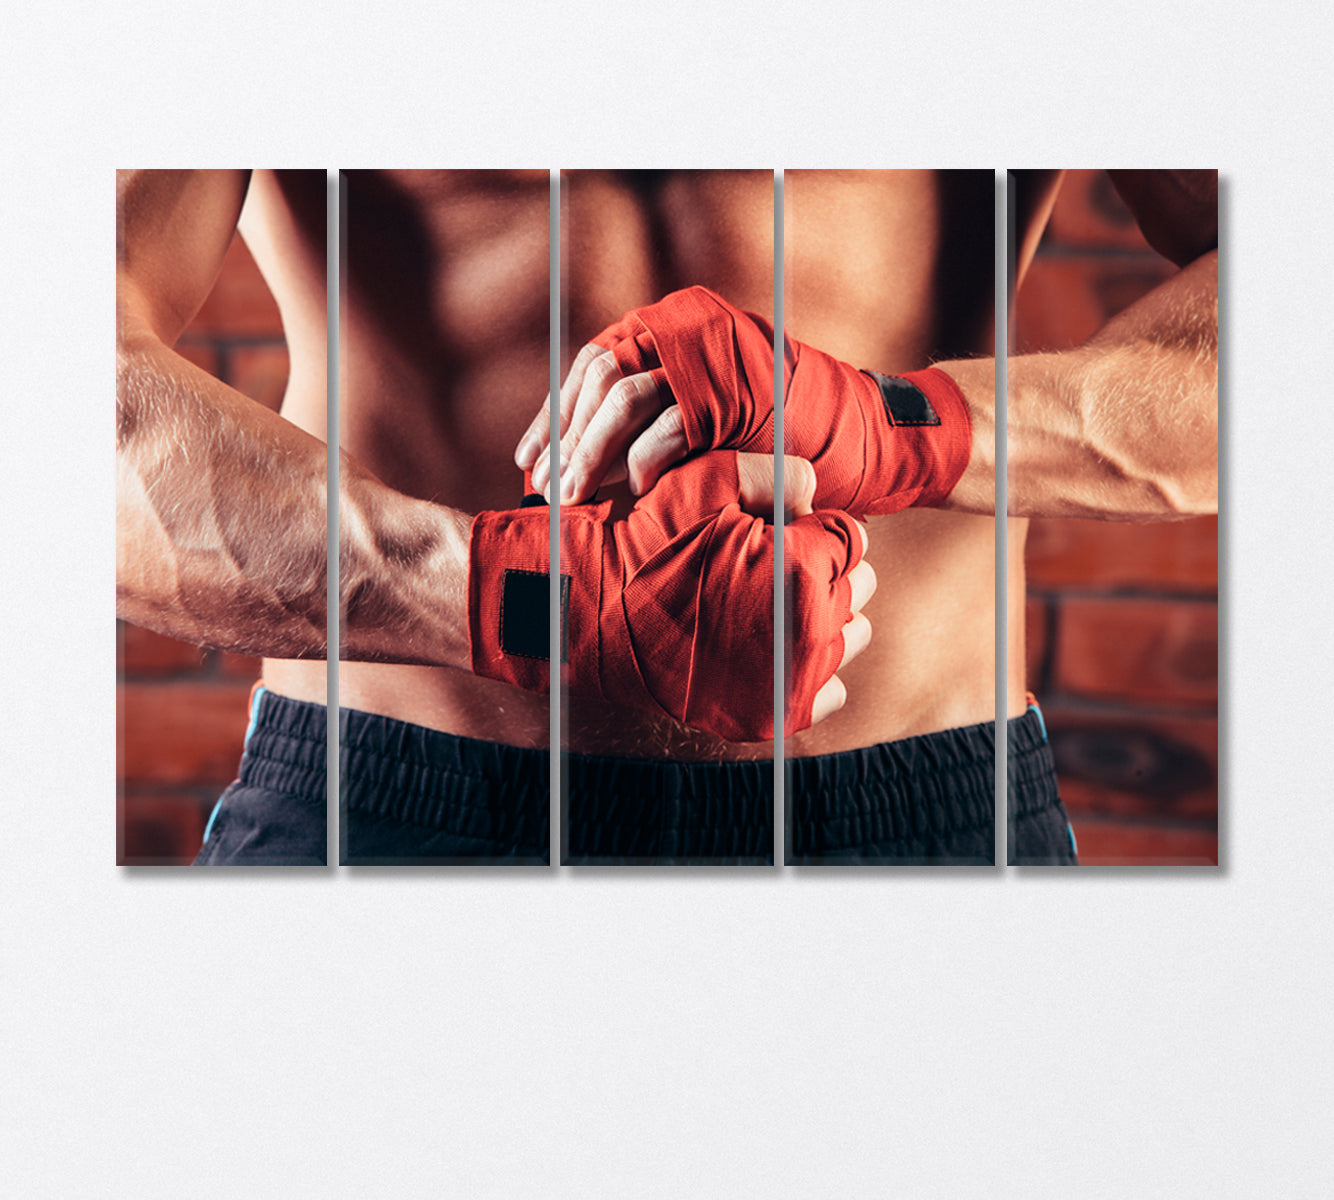 Kickboxer Bandaging Hands Preparing for Fight Canvas Print-Canvas Print-CetArt-5 Panels-36x24 inches-CetArt